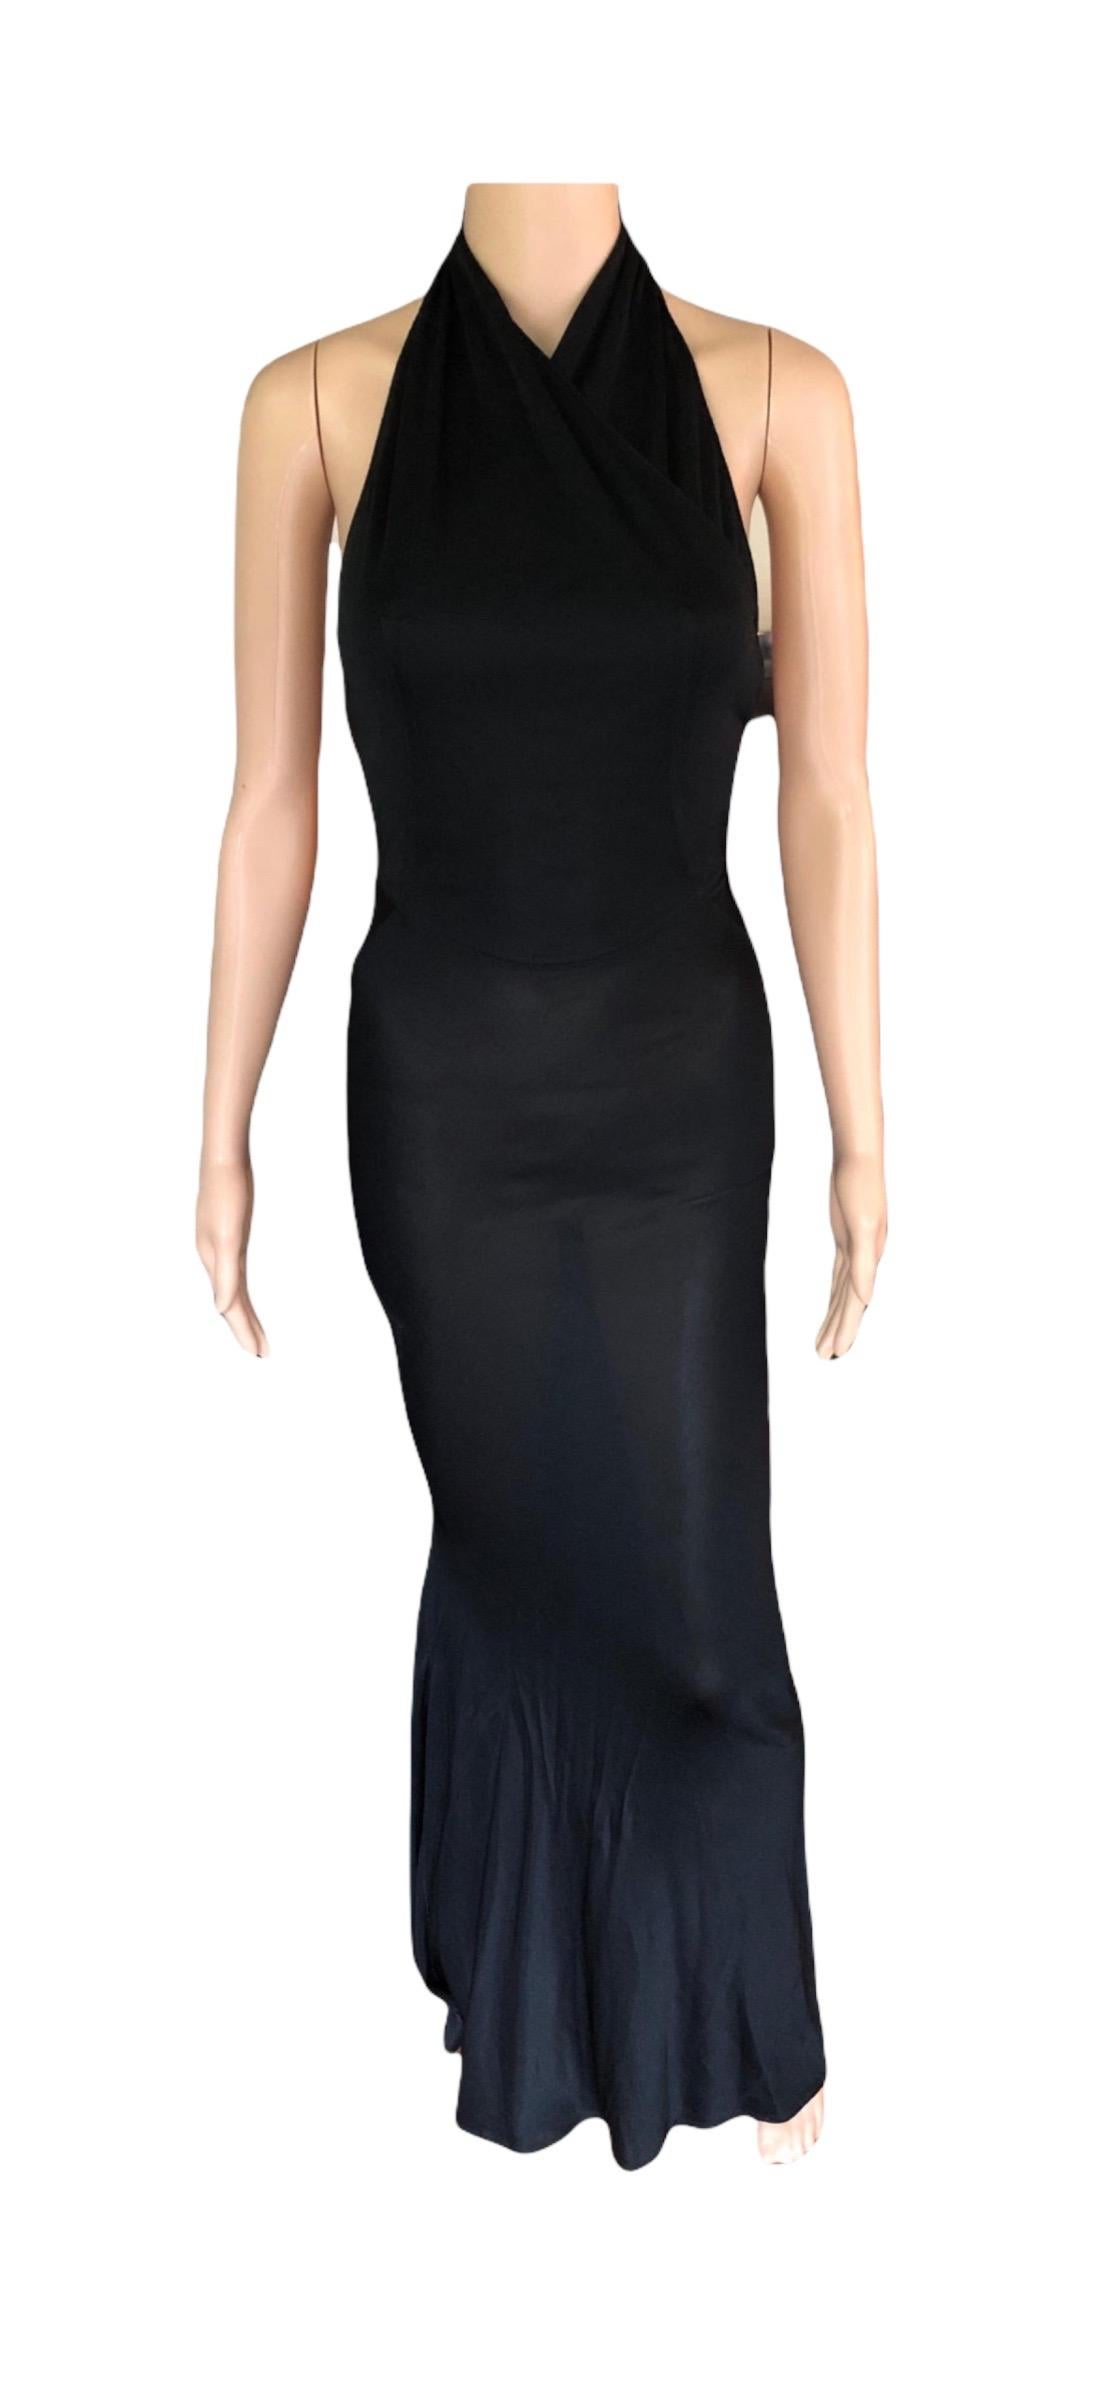 Azzedine Alaïa F/W 2001 Vintage Halter Backless Black Gown Maxi Dress For Sale 4